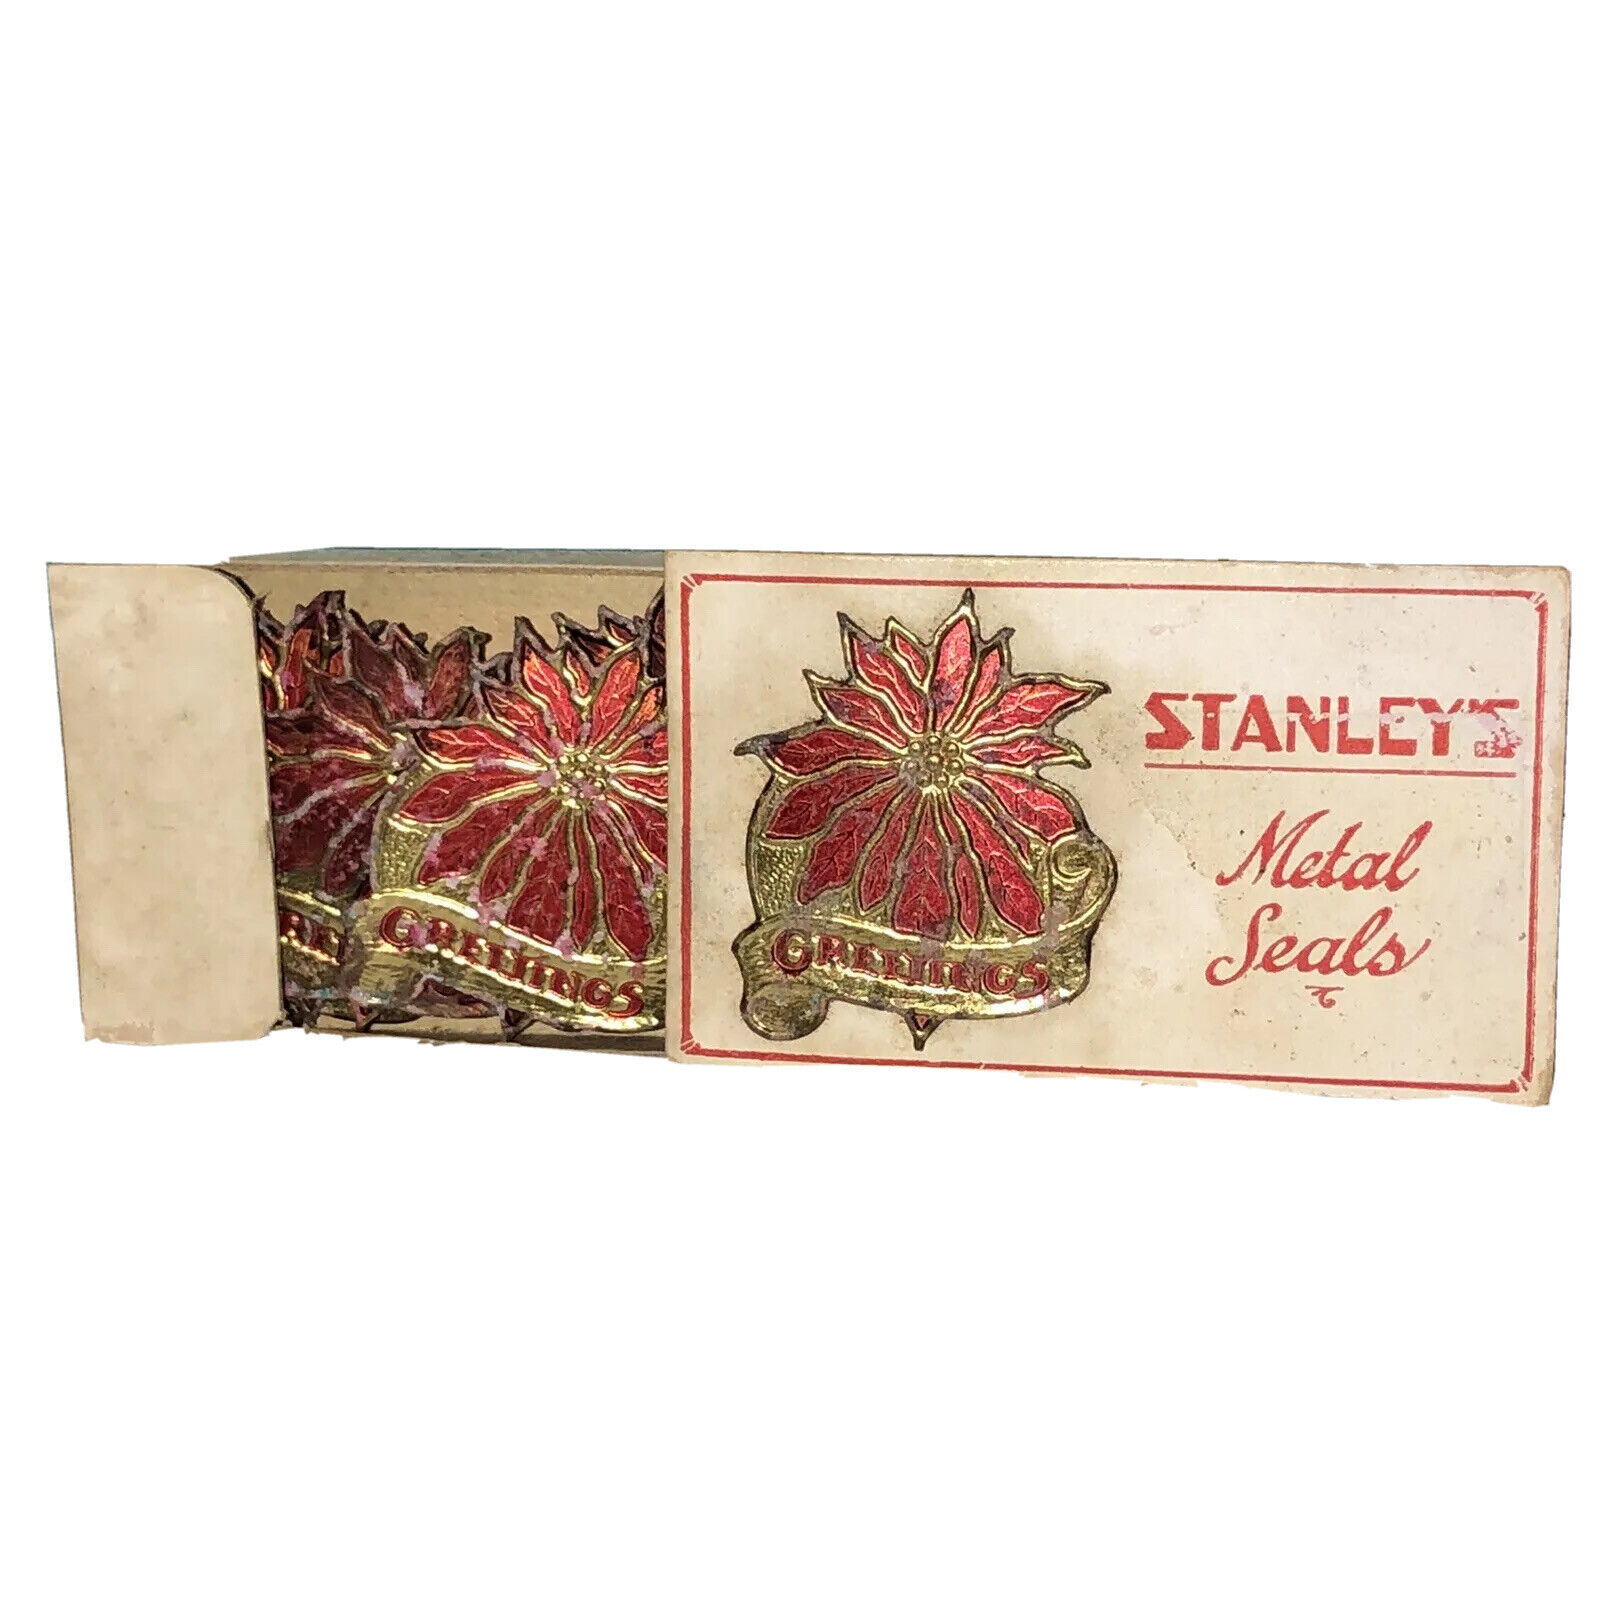 Antique/Art Deco 1920’s Stanley Envelope ￼Metal Seals Poinsettia ￼#5 Fun